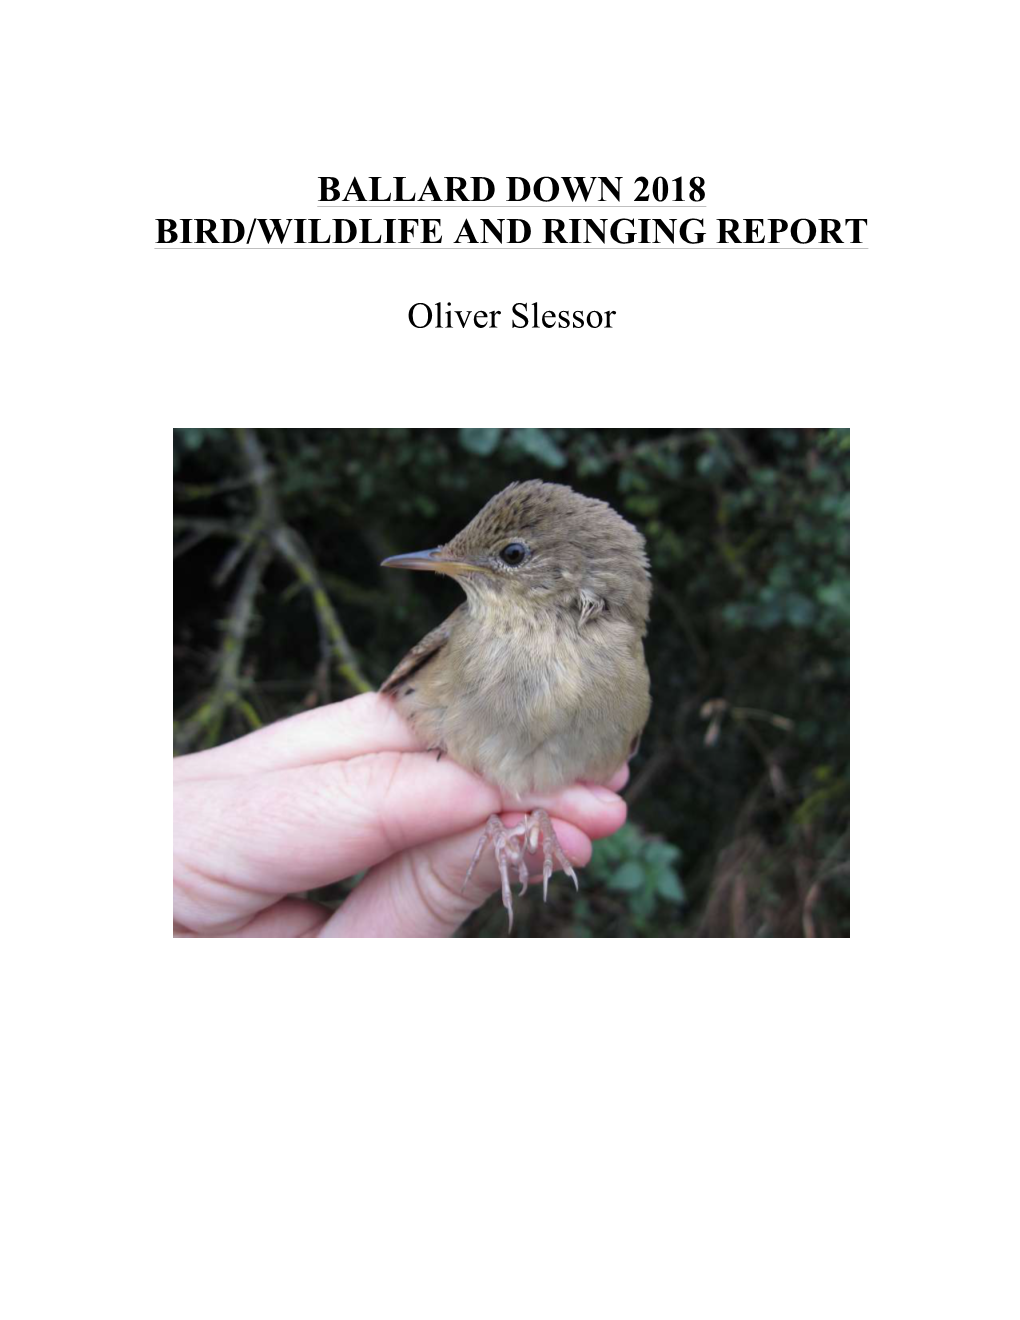 Ballard Down 2018 Bird/Wildlife and Ringing Report